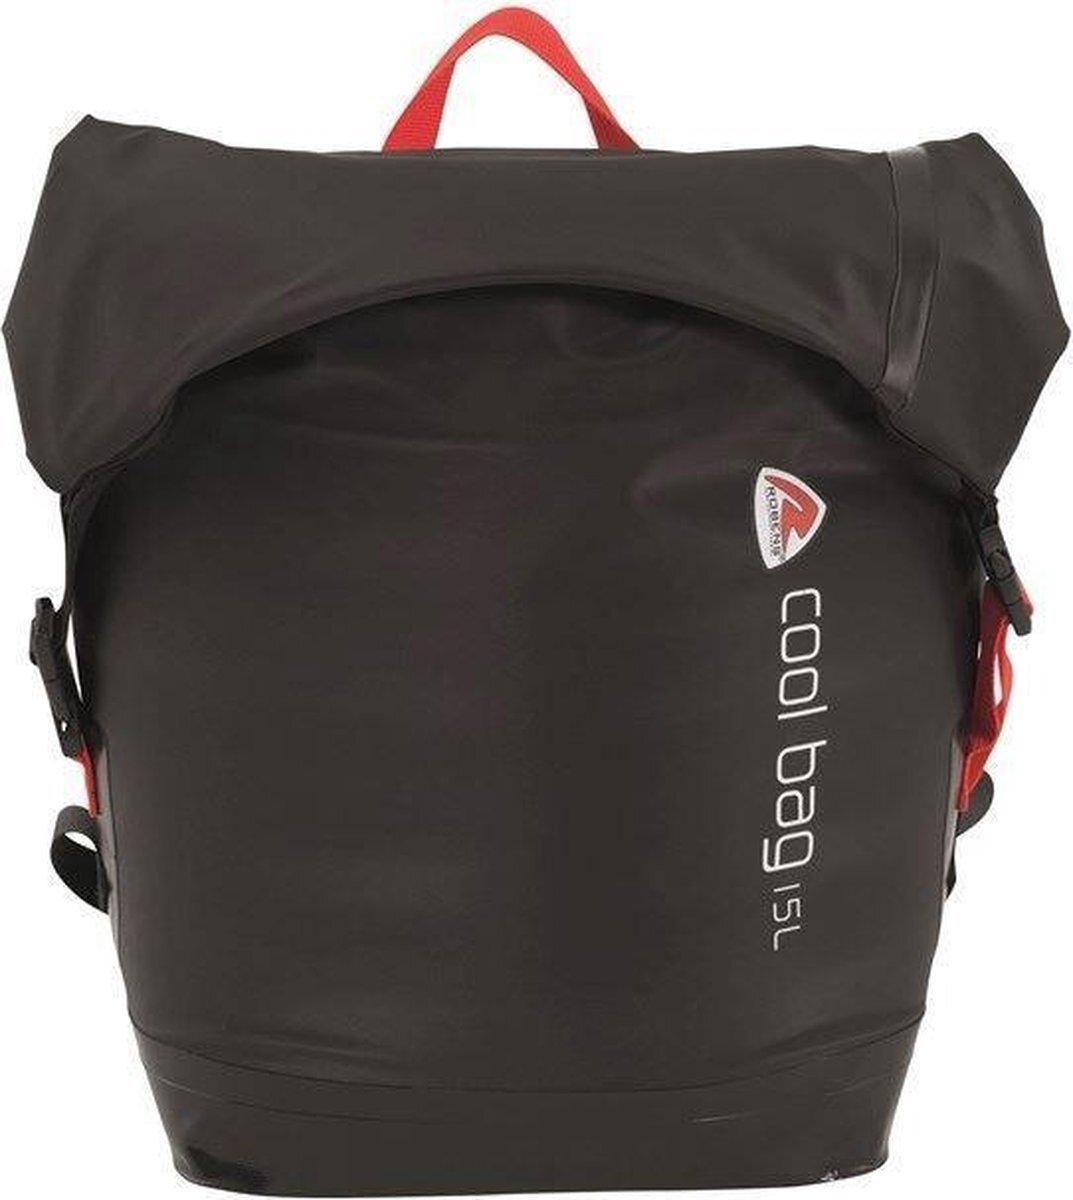 Robens Cool bag 15L